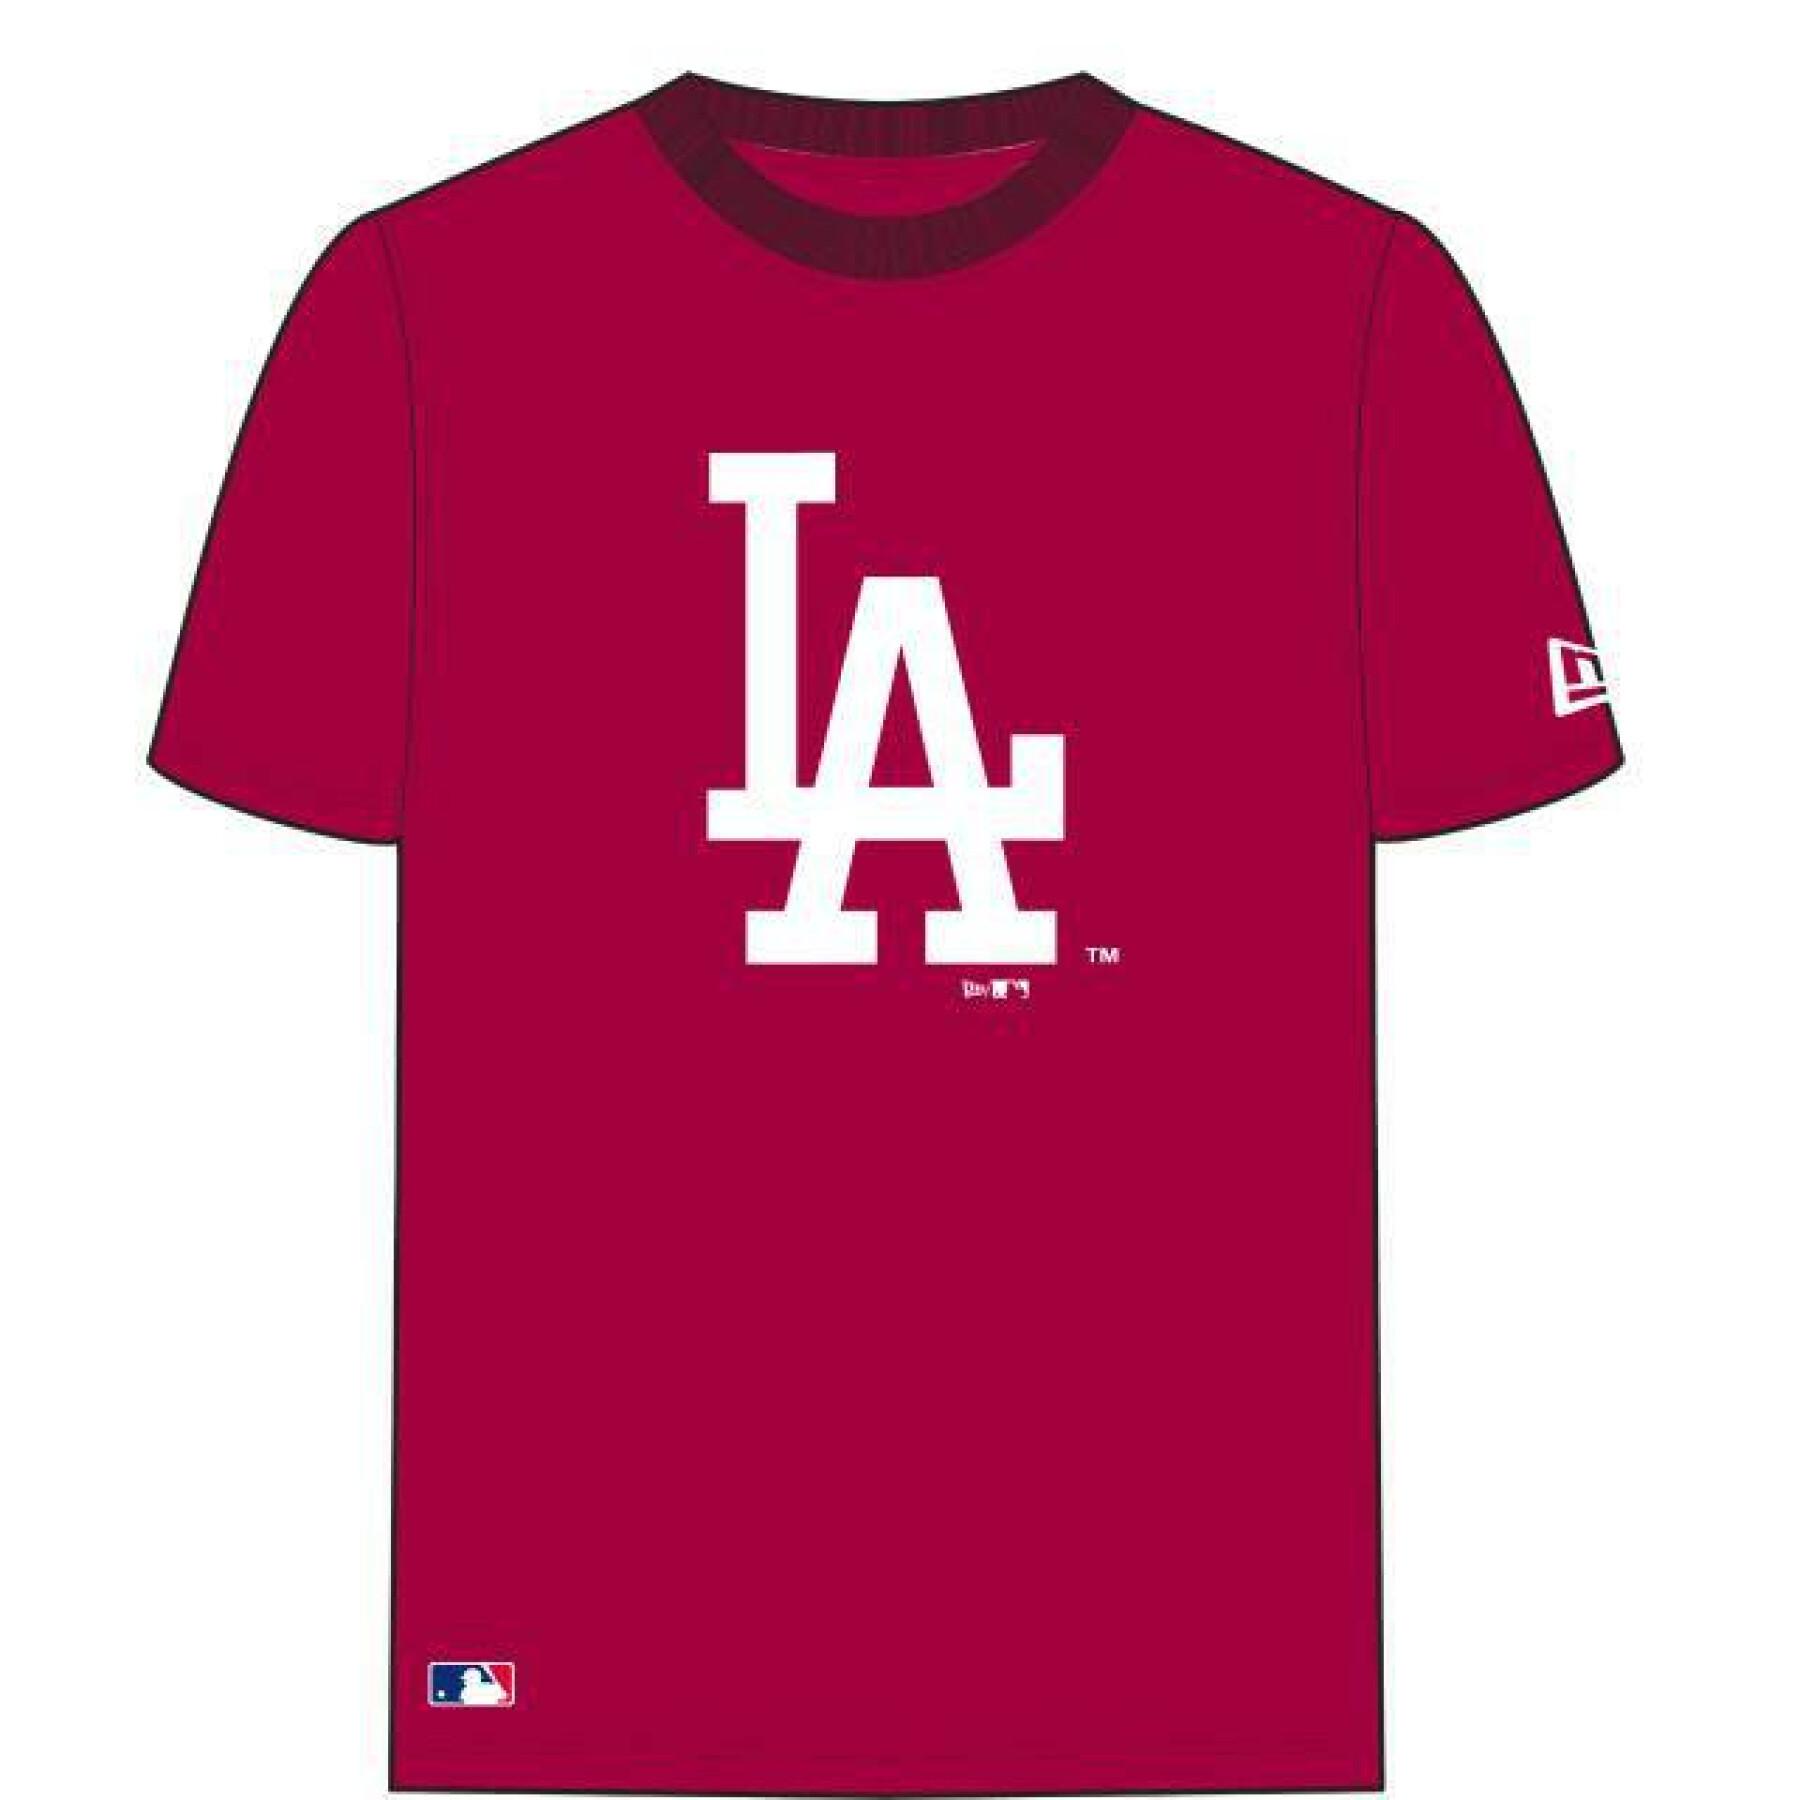  New EraT - s h i r t   Seasonal Logo Los Angeles Dodgers